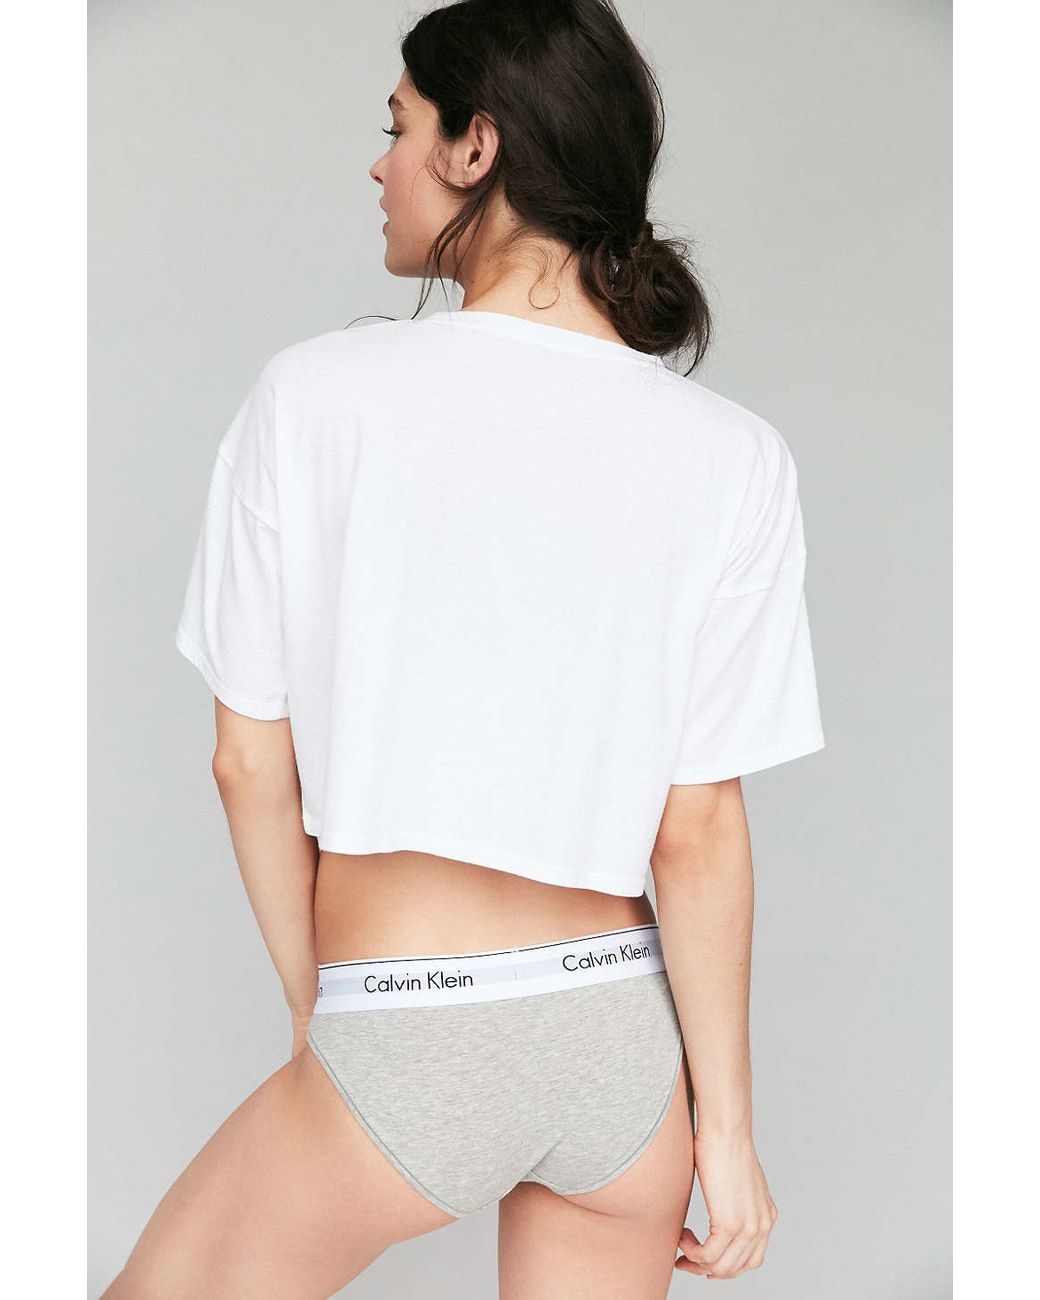 Calvin Klein Cropped Tee Shirt in White